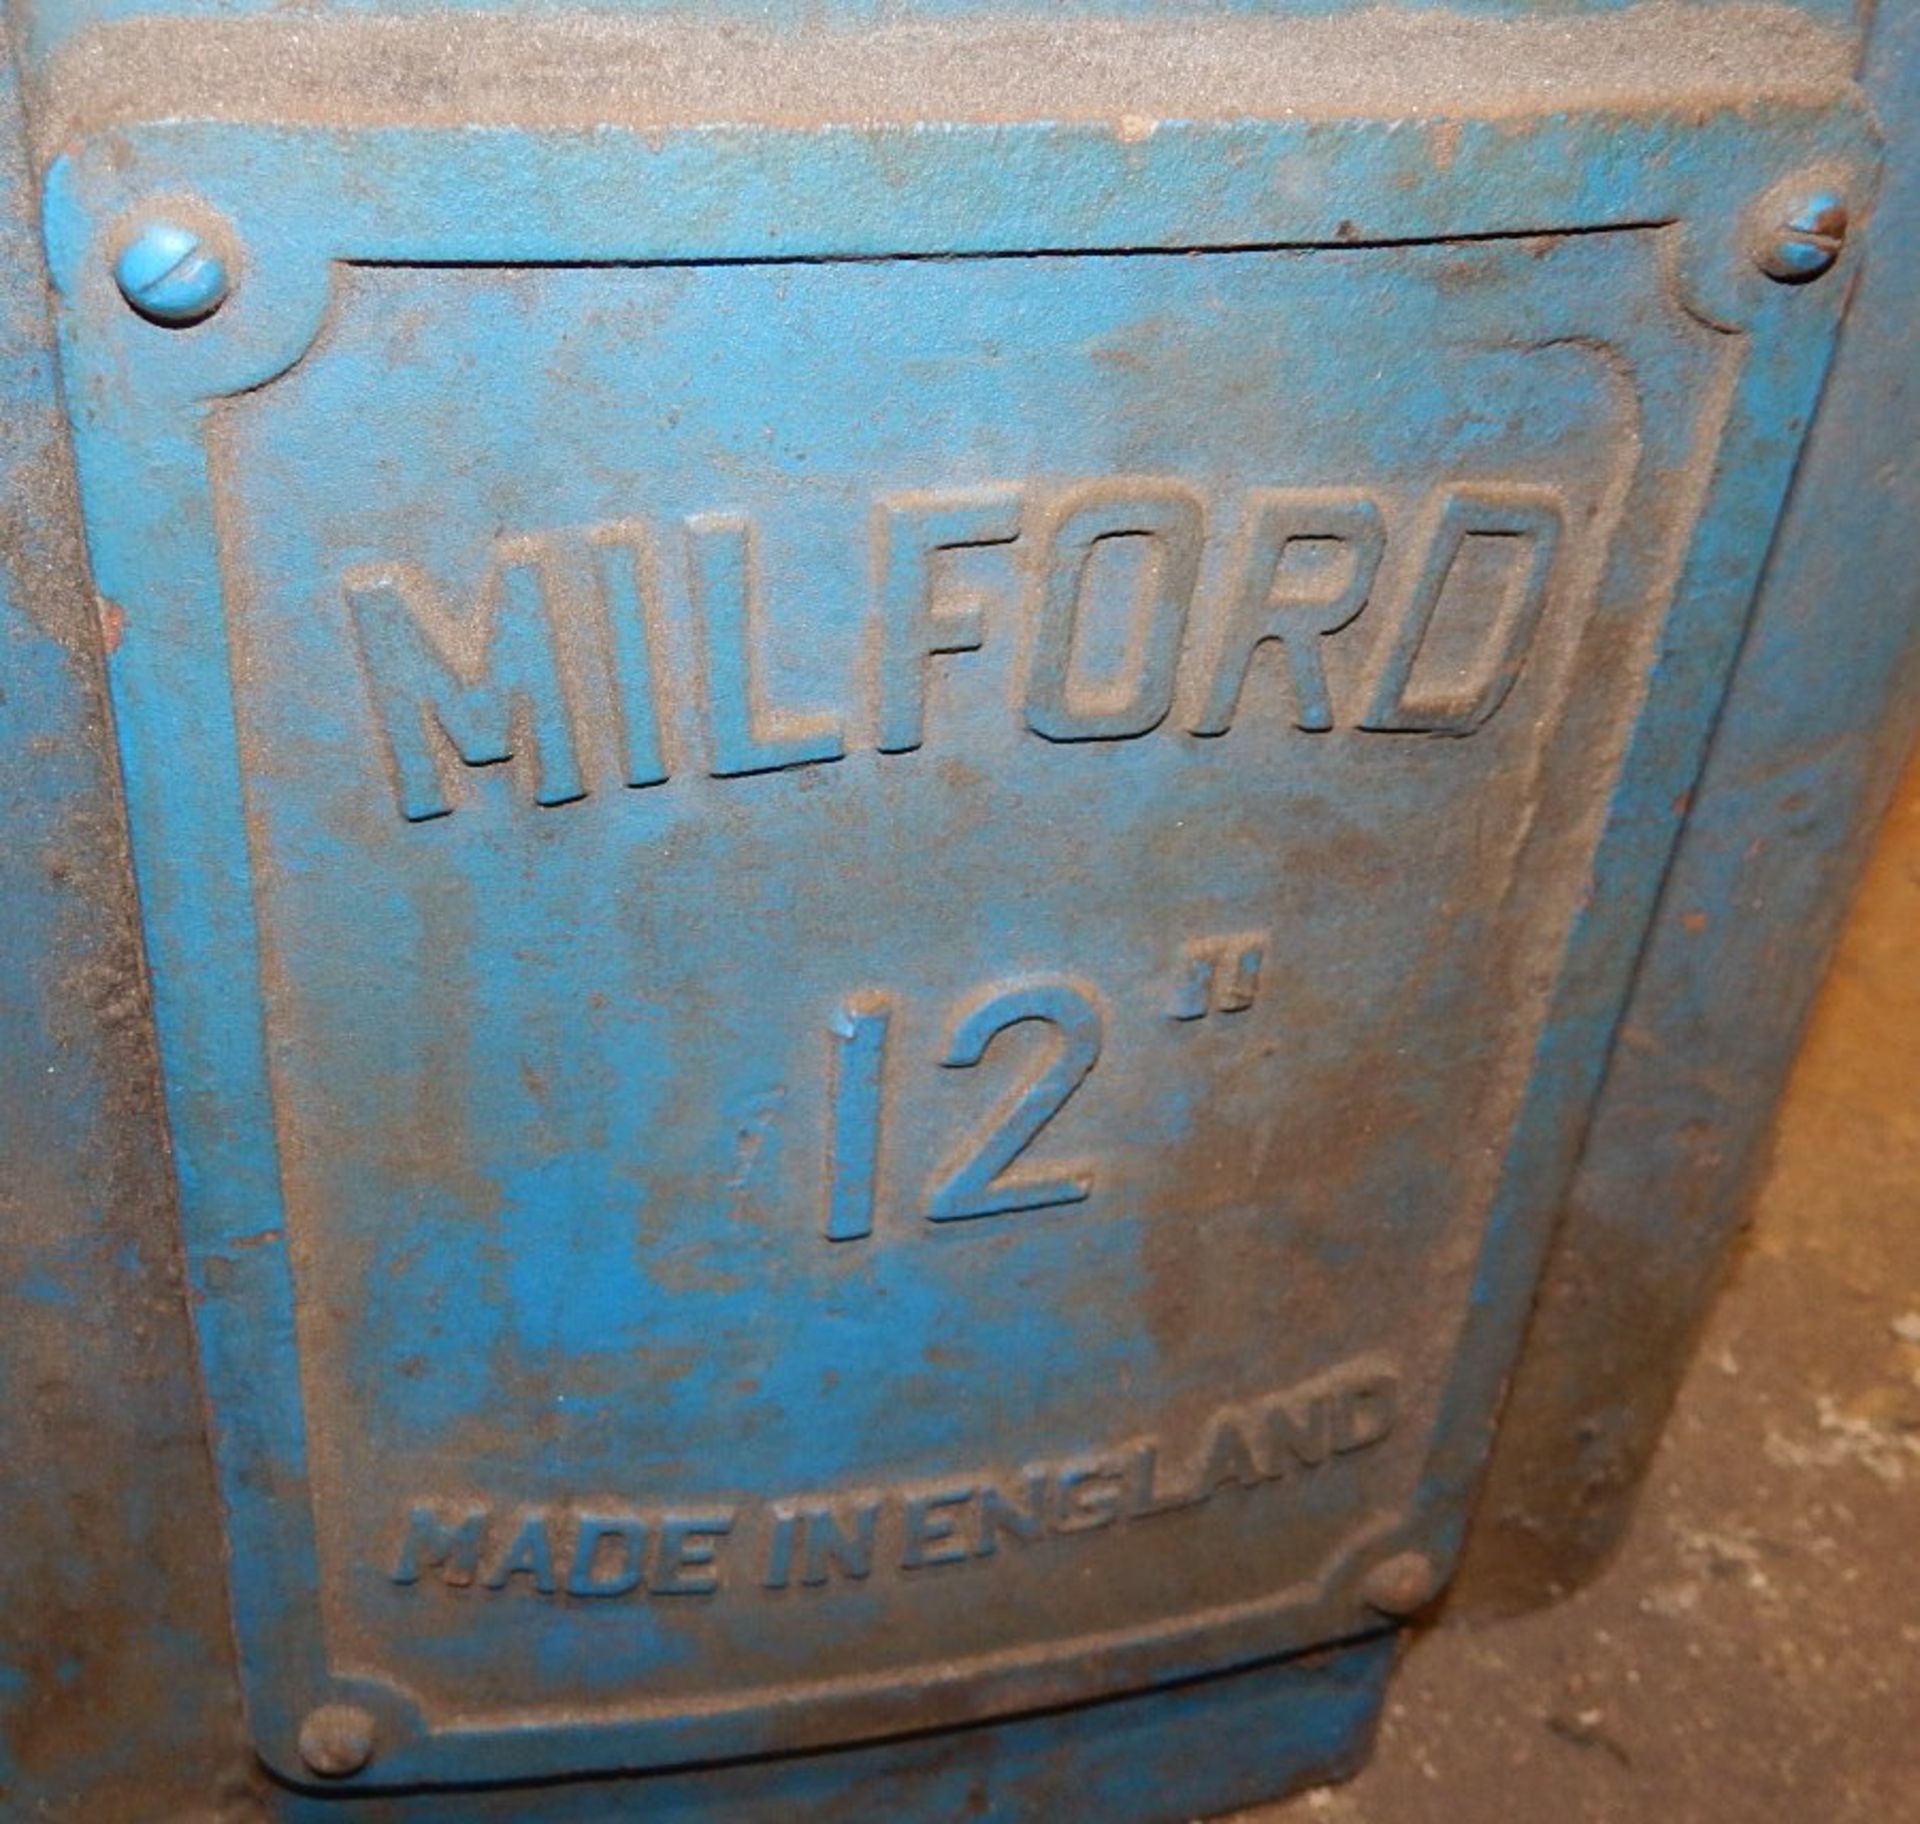 MILFORD 12" DOUBLE END PEDESTAL GRINDER, S/N: N/A - Image 3 of 3